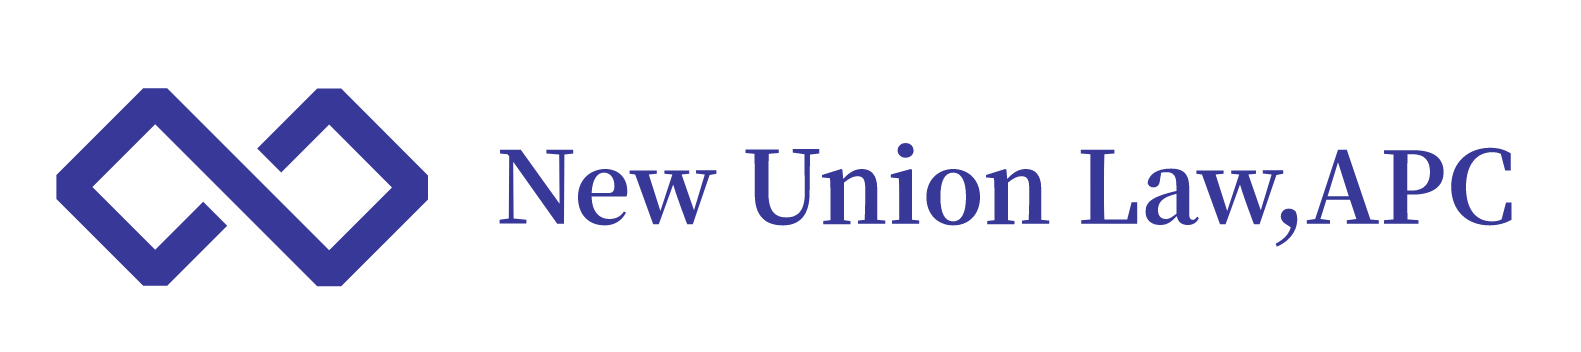 New Union Law